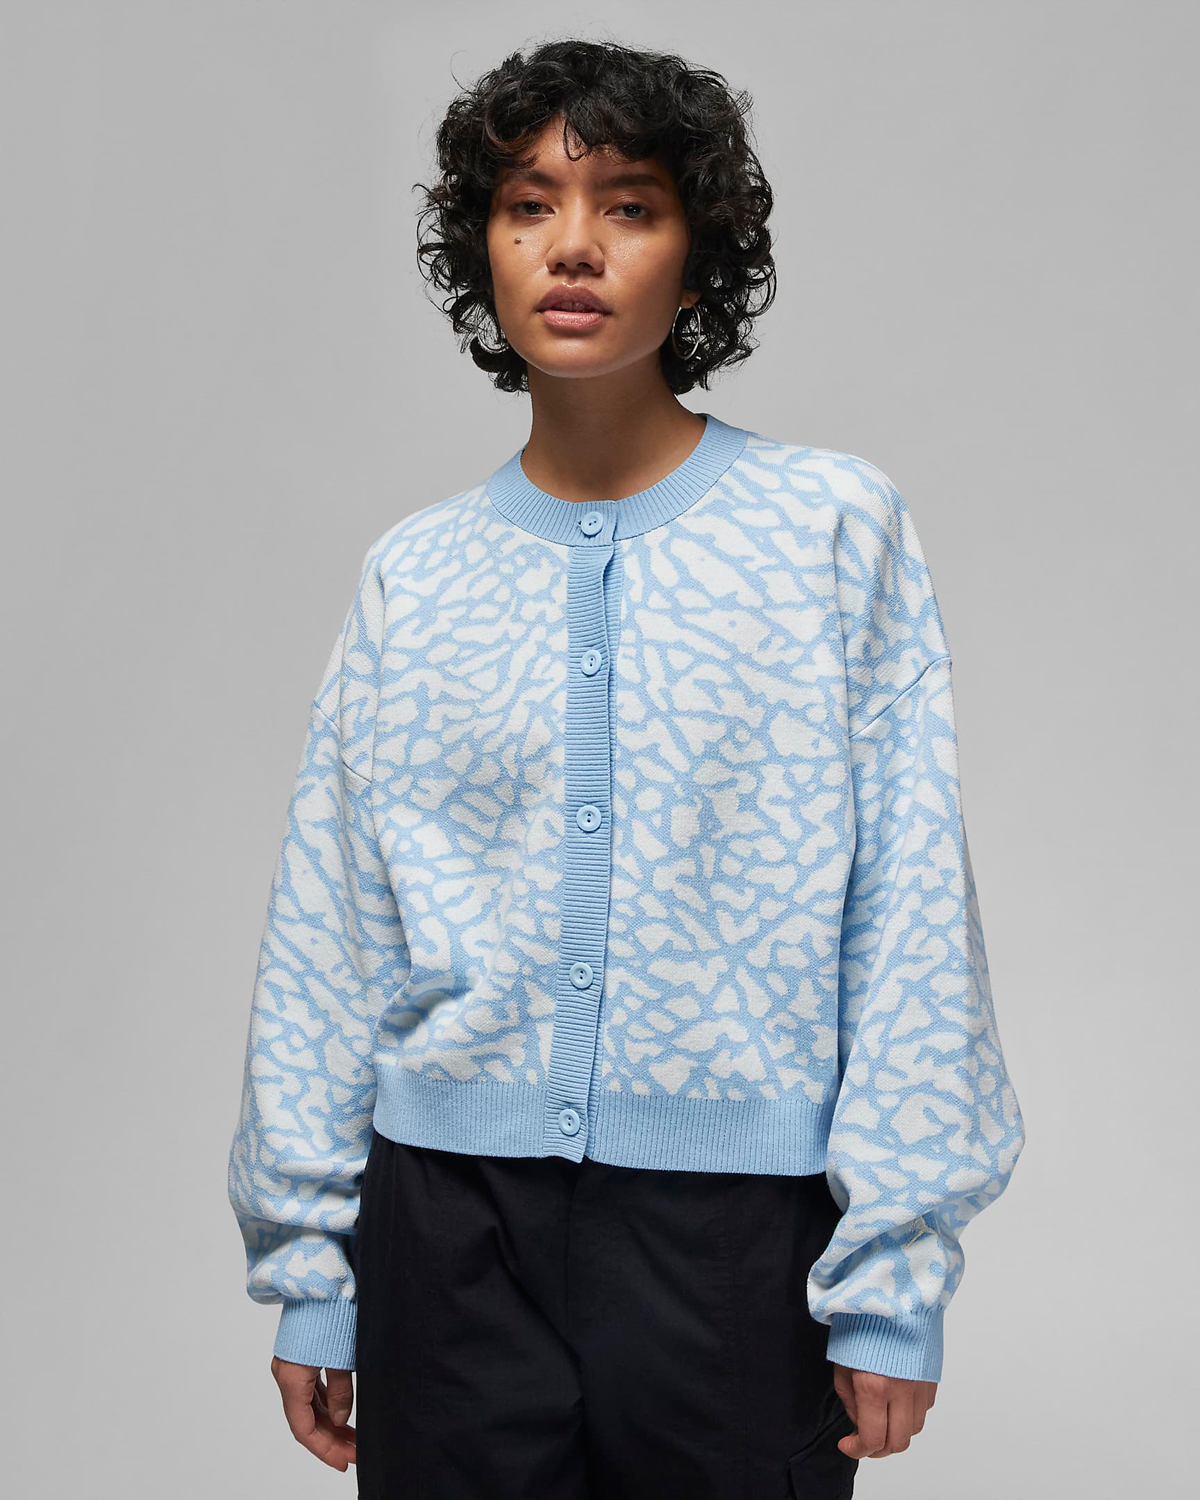 Jordan-Womens-Elephant-Print-Cardigan-Sweater-Ice-Blue